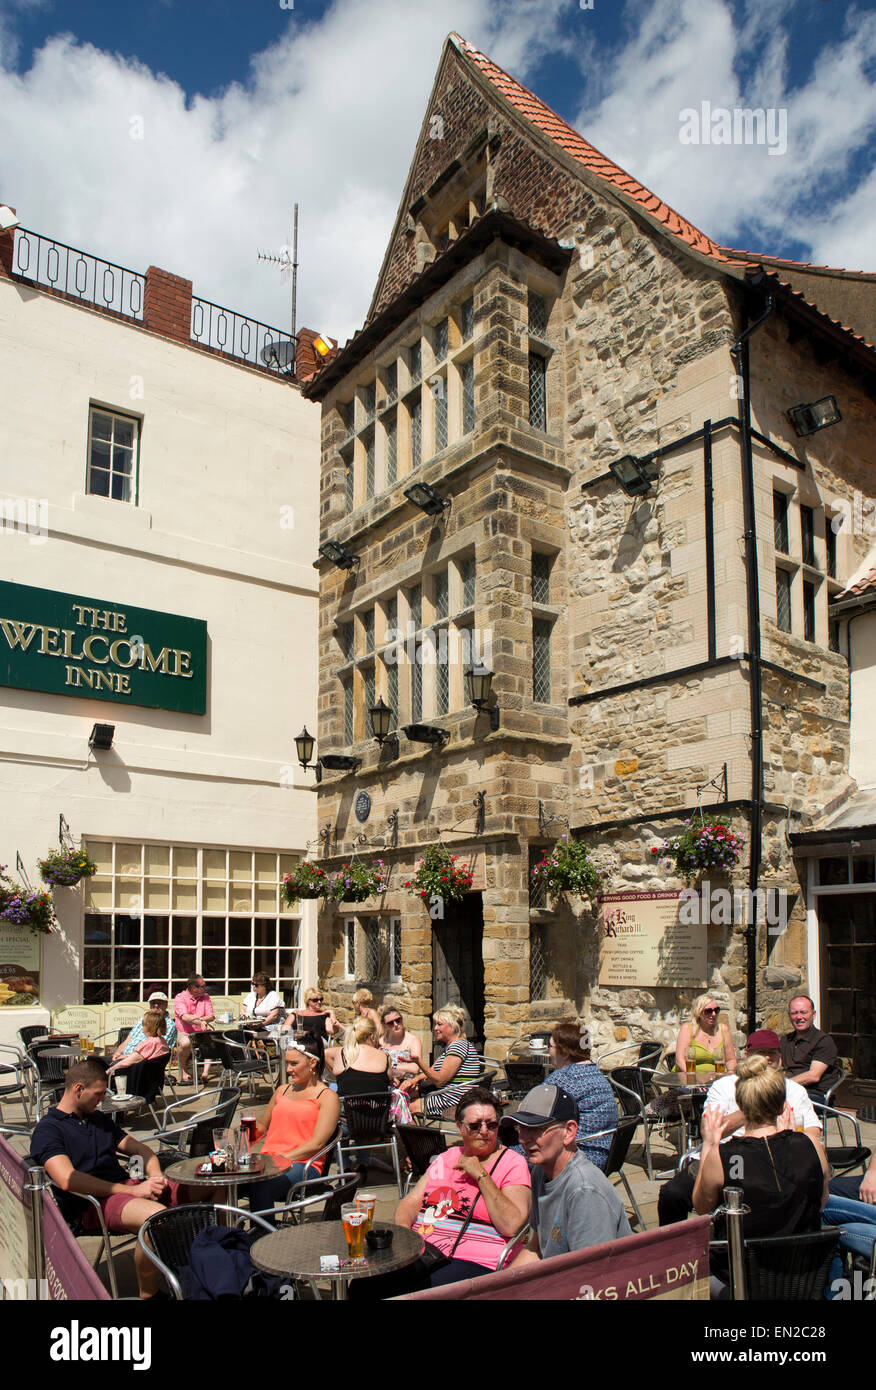 UK, England, Yorkshire, Scarborough, Sandside, customers outside King Richard III pub in sunshine Stock Photo